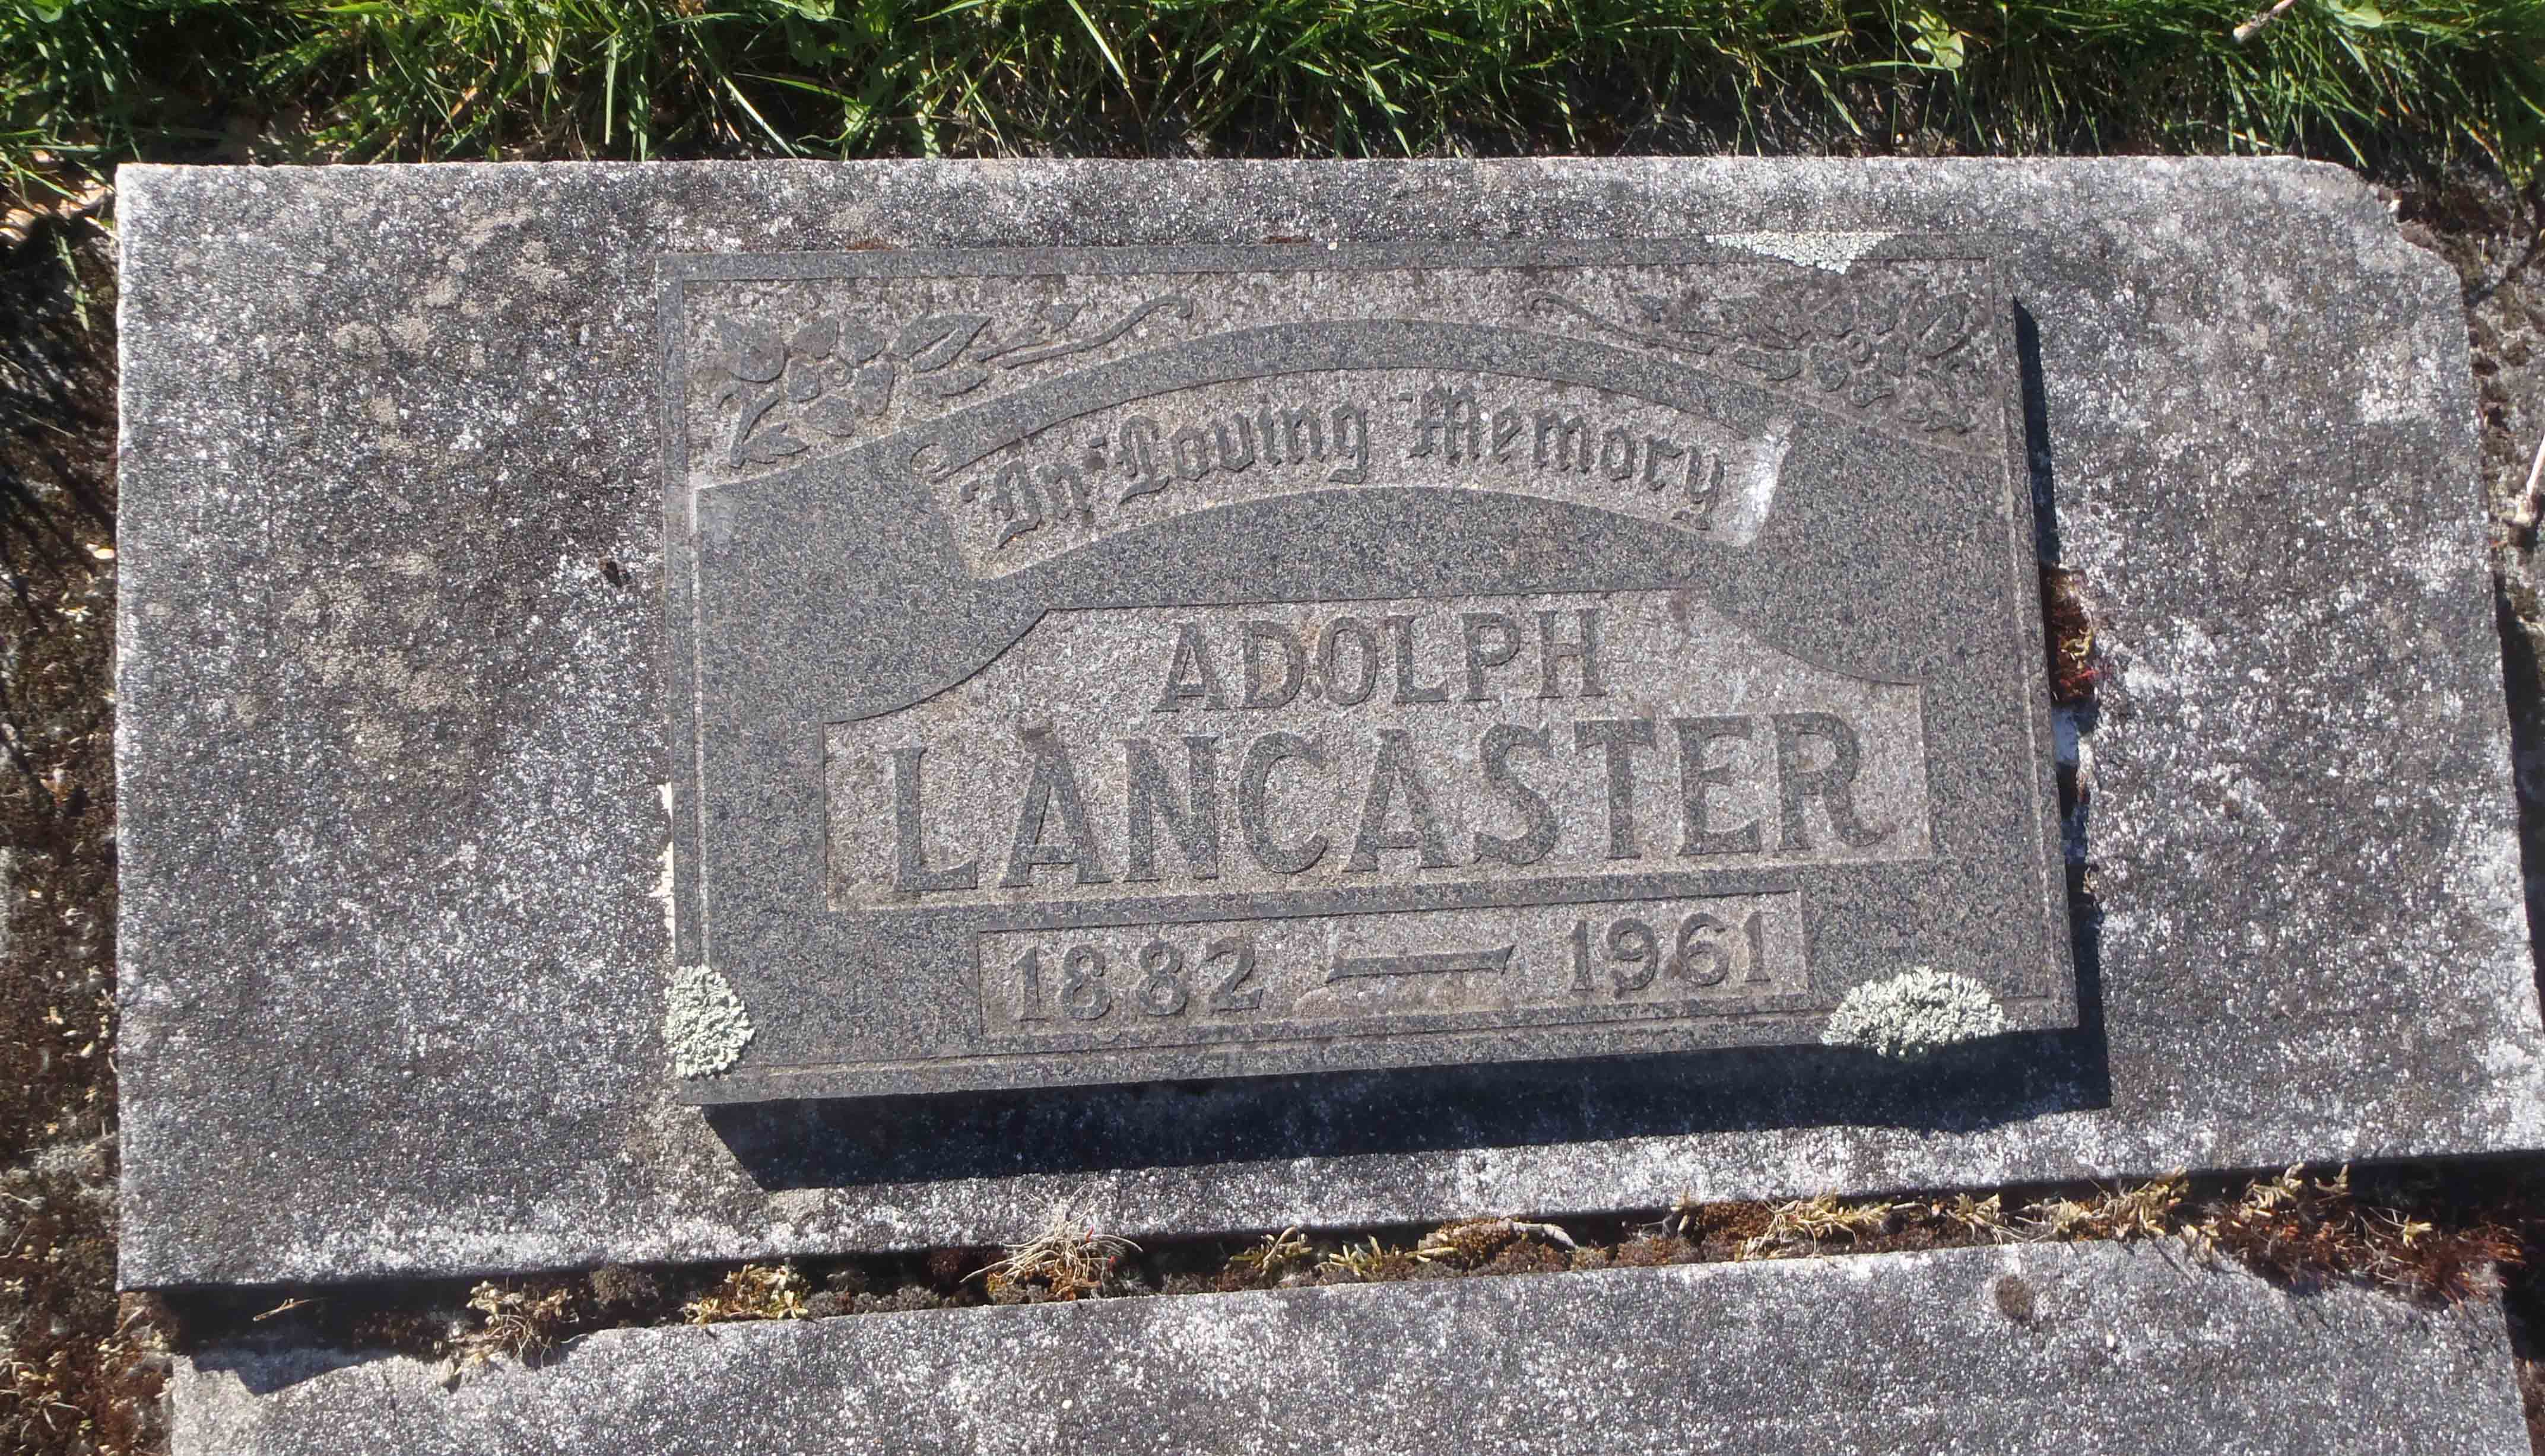 Adolph Lancaster tomb inscription